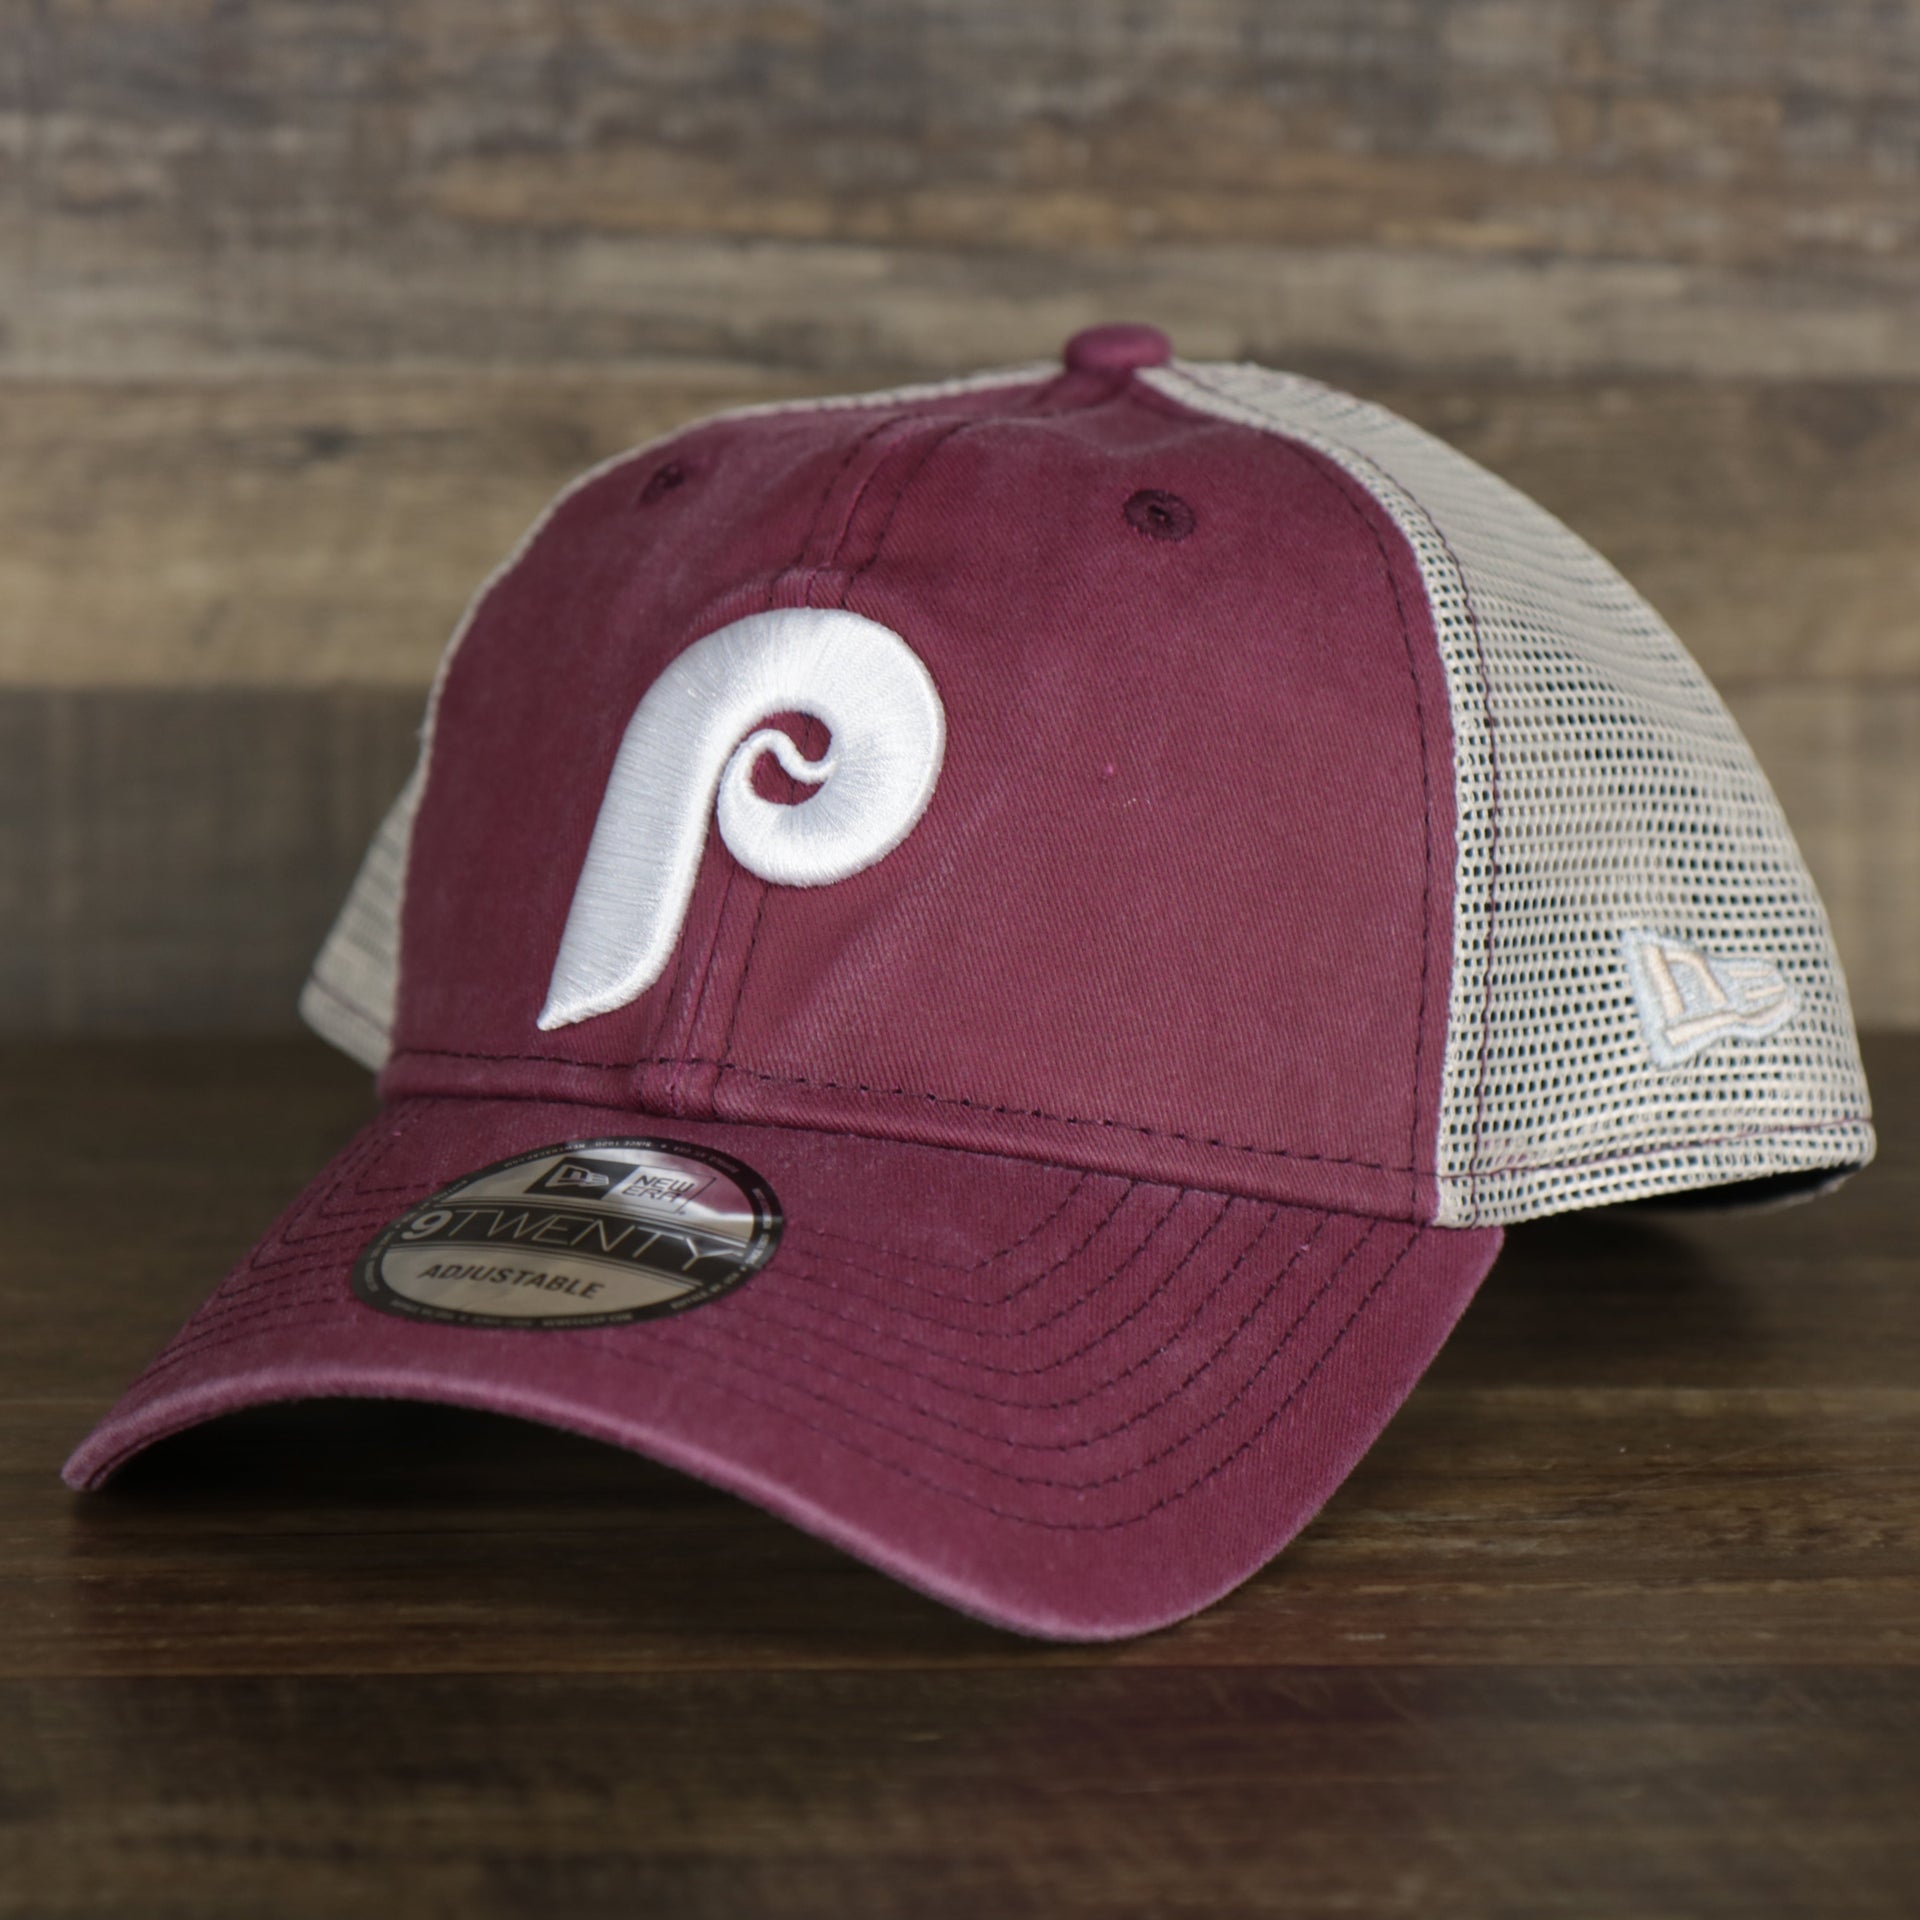 The Philadelphia Phillies Cooperstown New Era 9Twenty Washed Trucker hat